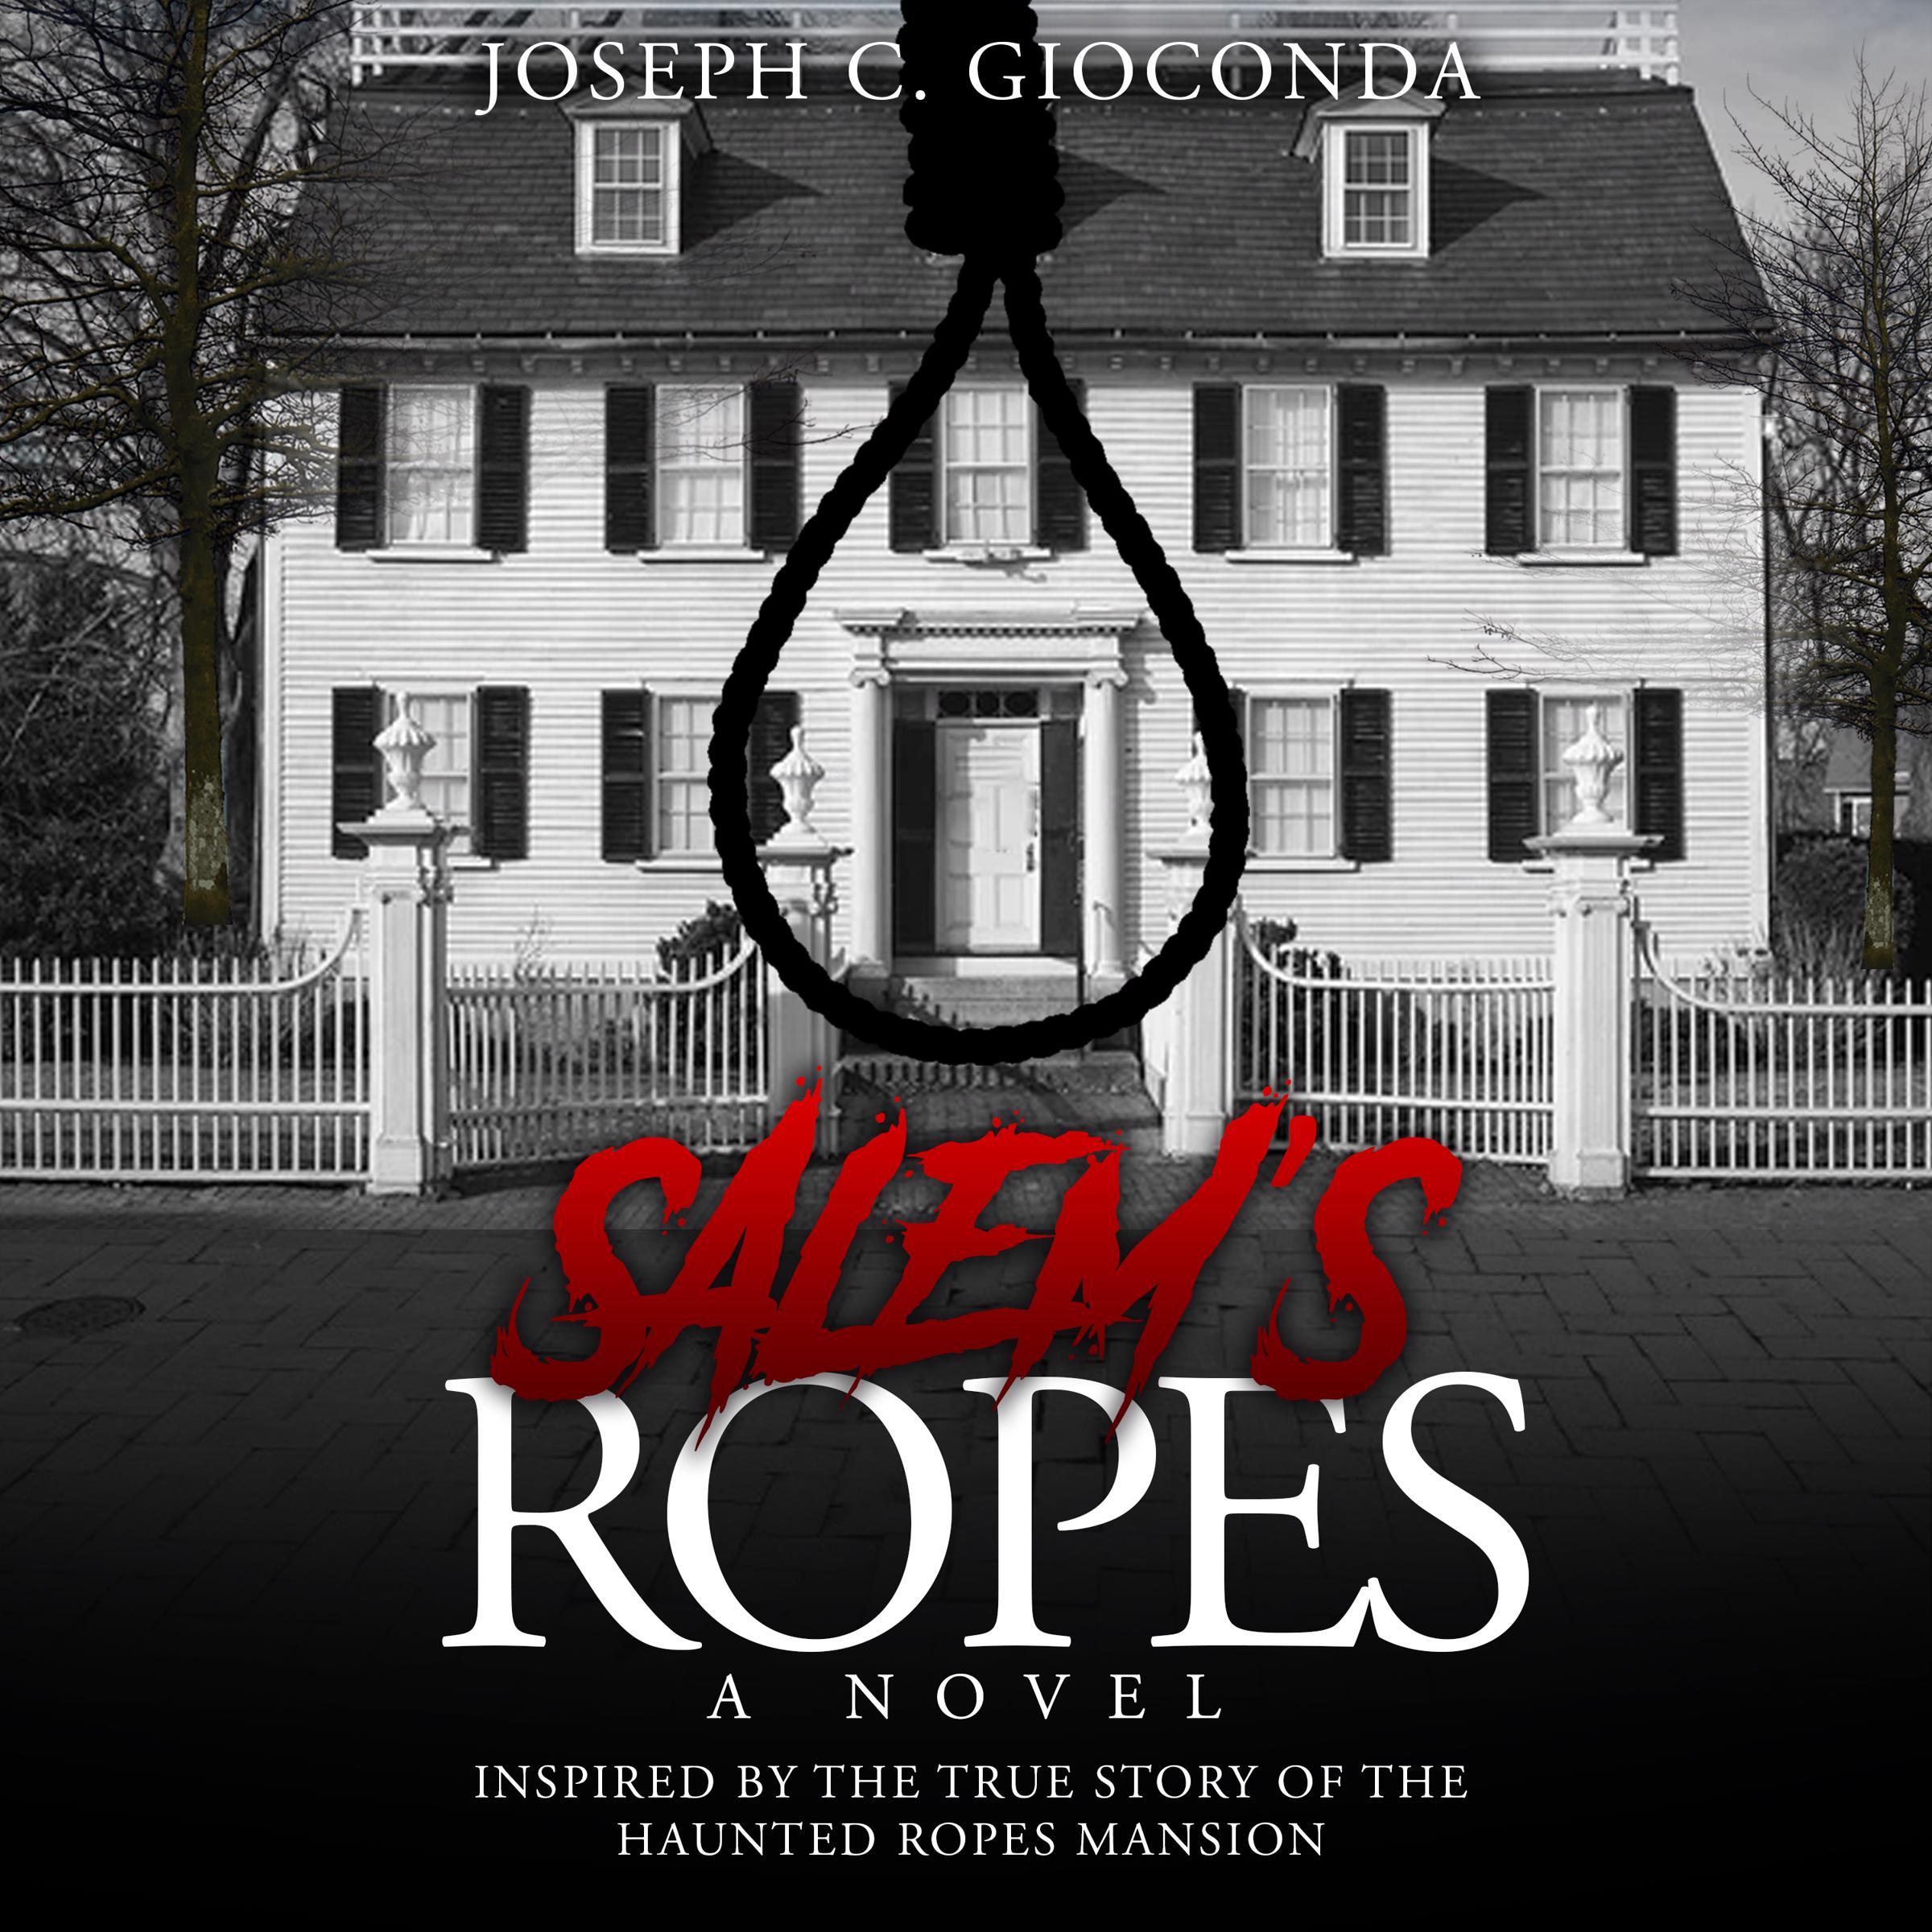 Salem's Ropes